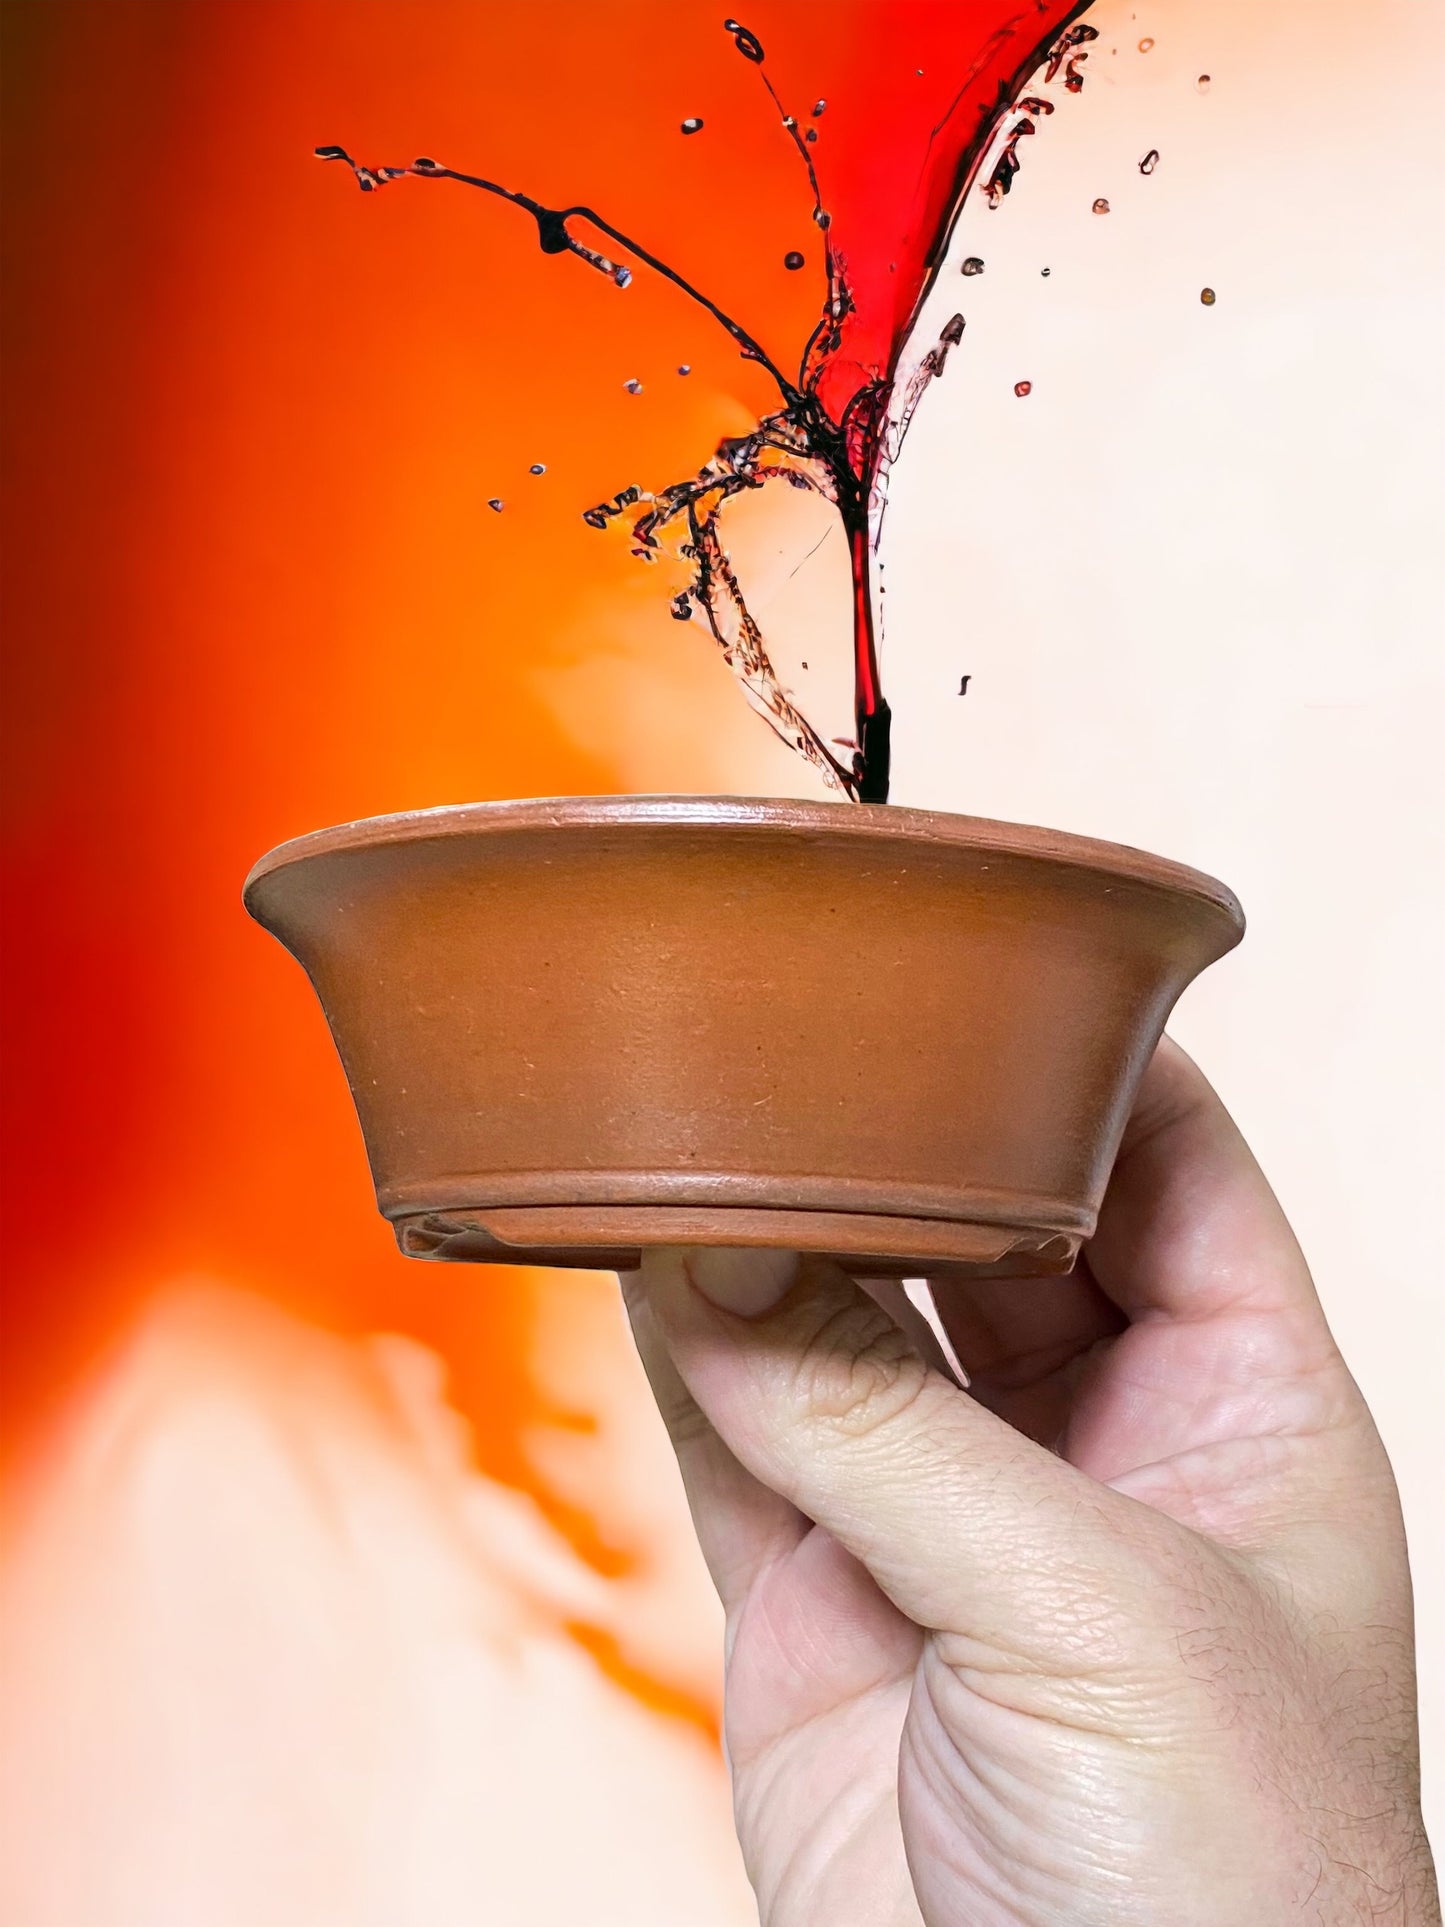 Yamaaki - Unglazed Rimmed Bowl Bonsai Pot